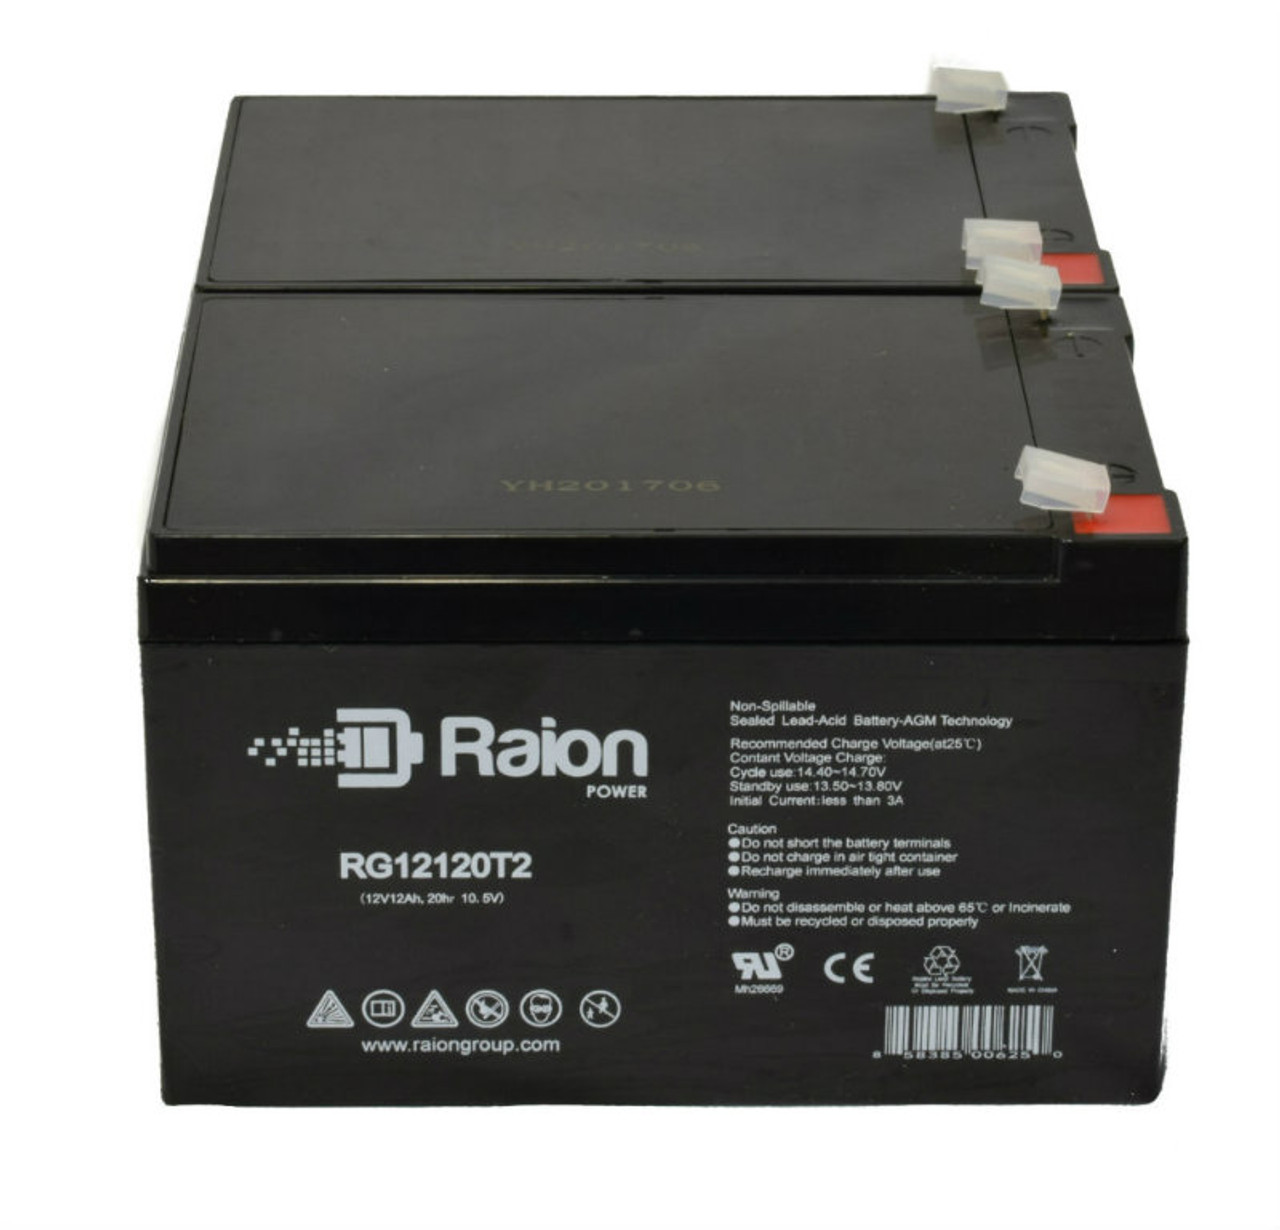 Raion Power 12V 12Ah Non-Spillable Compatible Replacement Battery for Magnavolt SLA12-14 - (2 Pack)